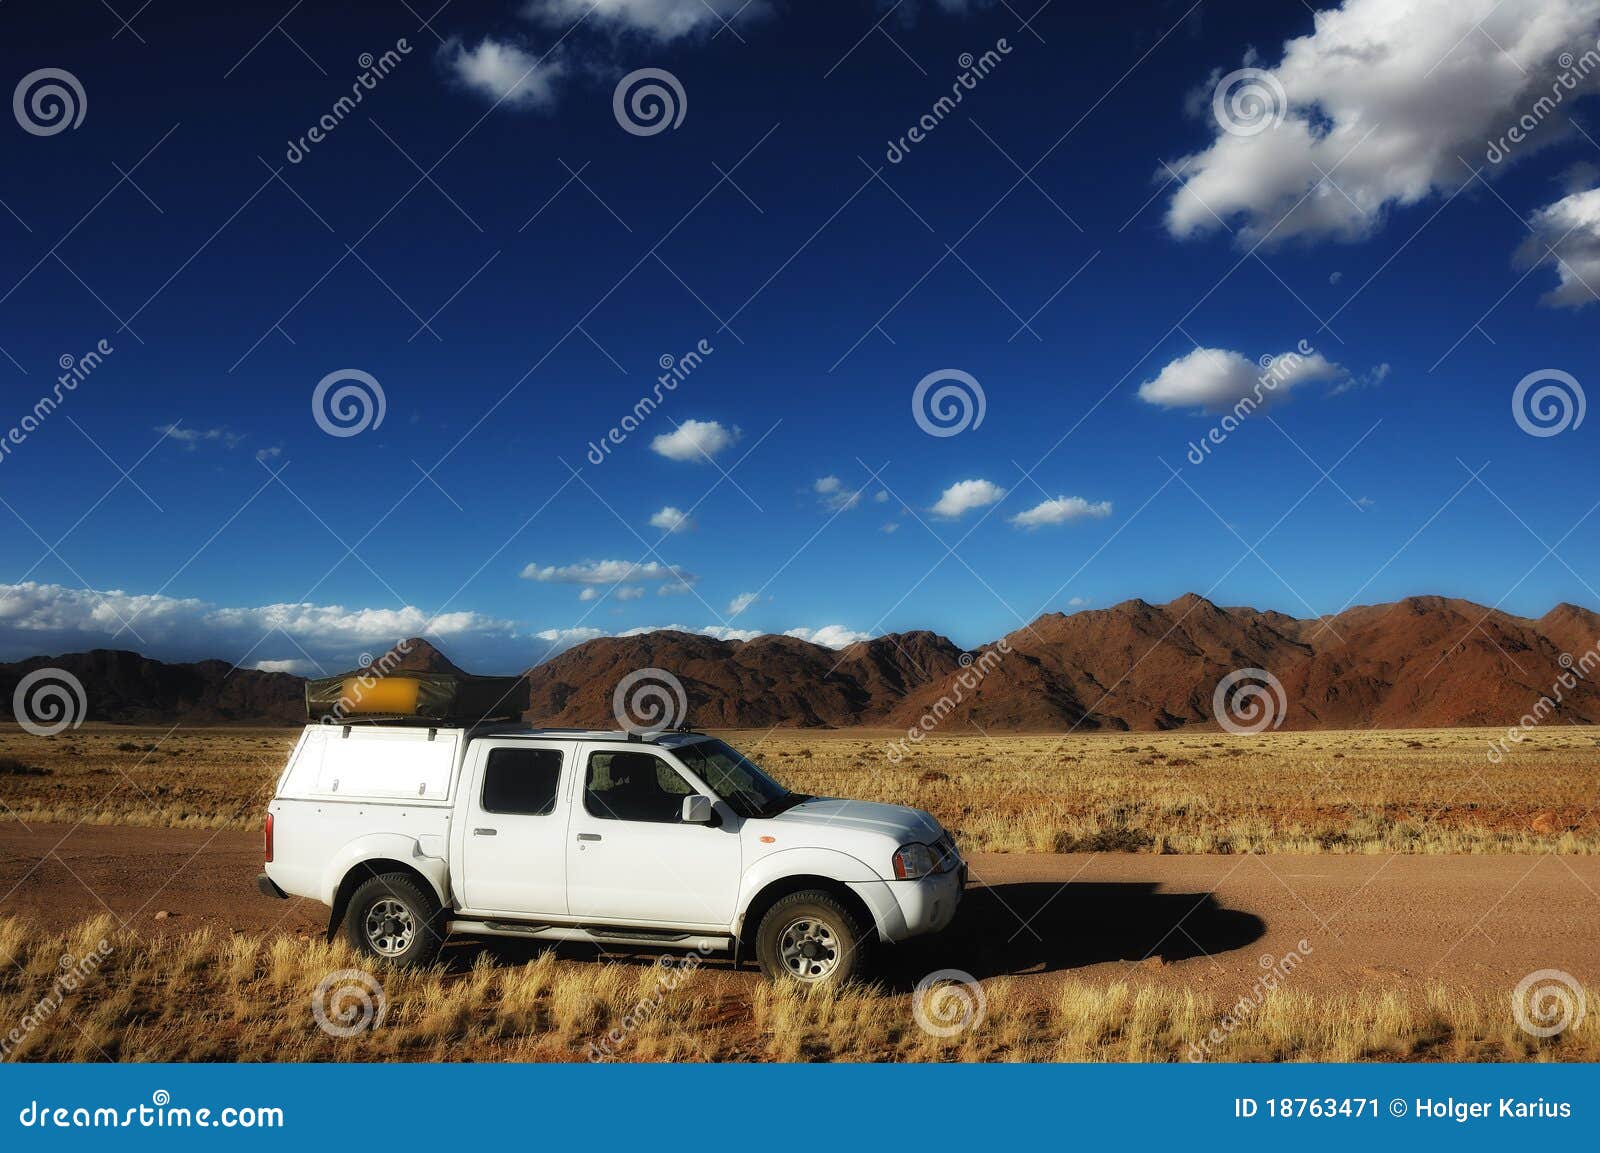 4x4 vehicle in namibia